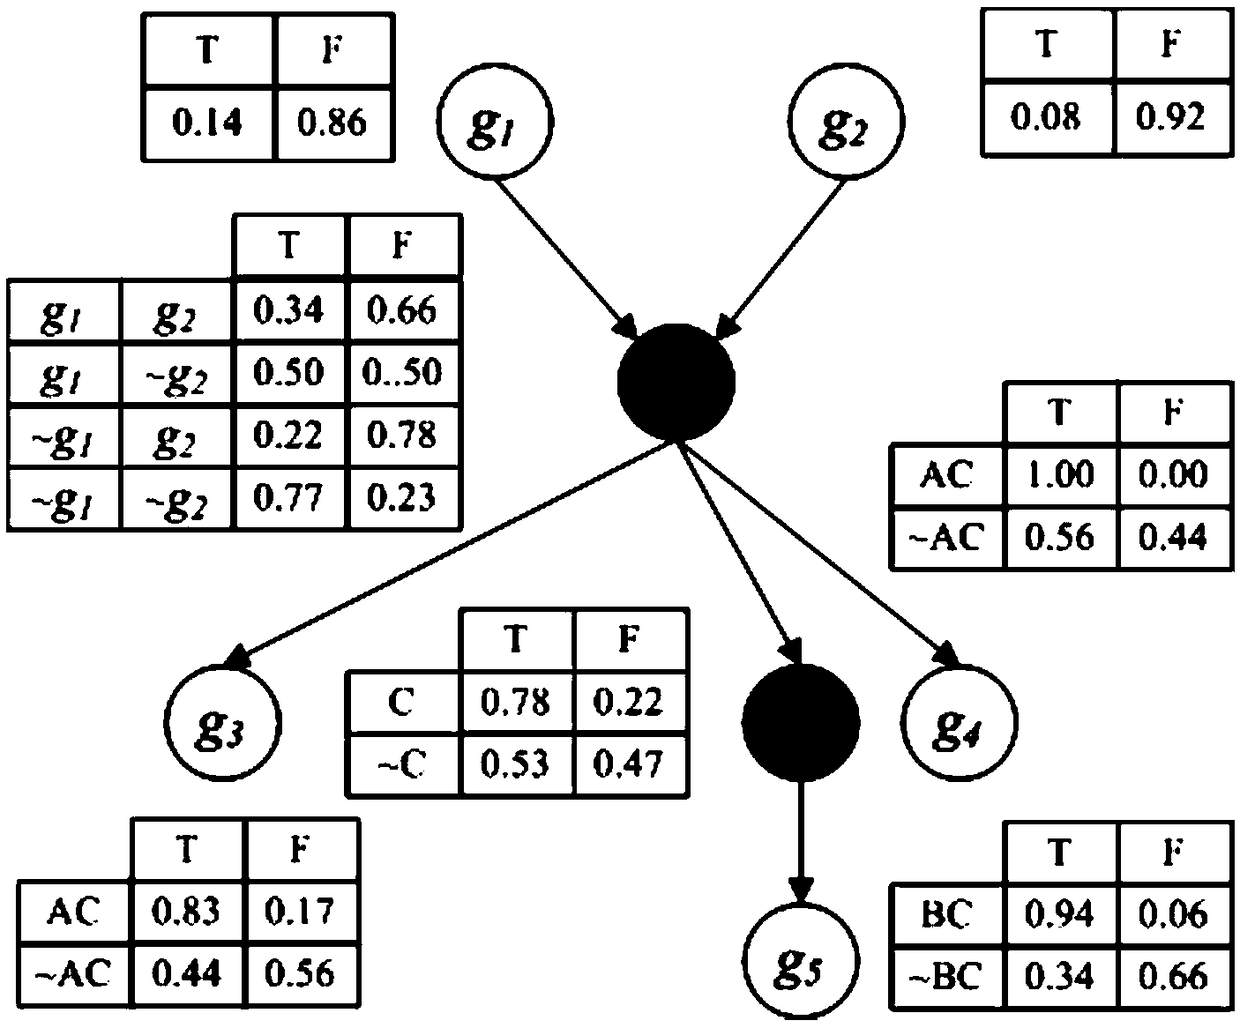 Intergenic interaction relation excavation method based on Bayesian network reasoning